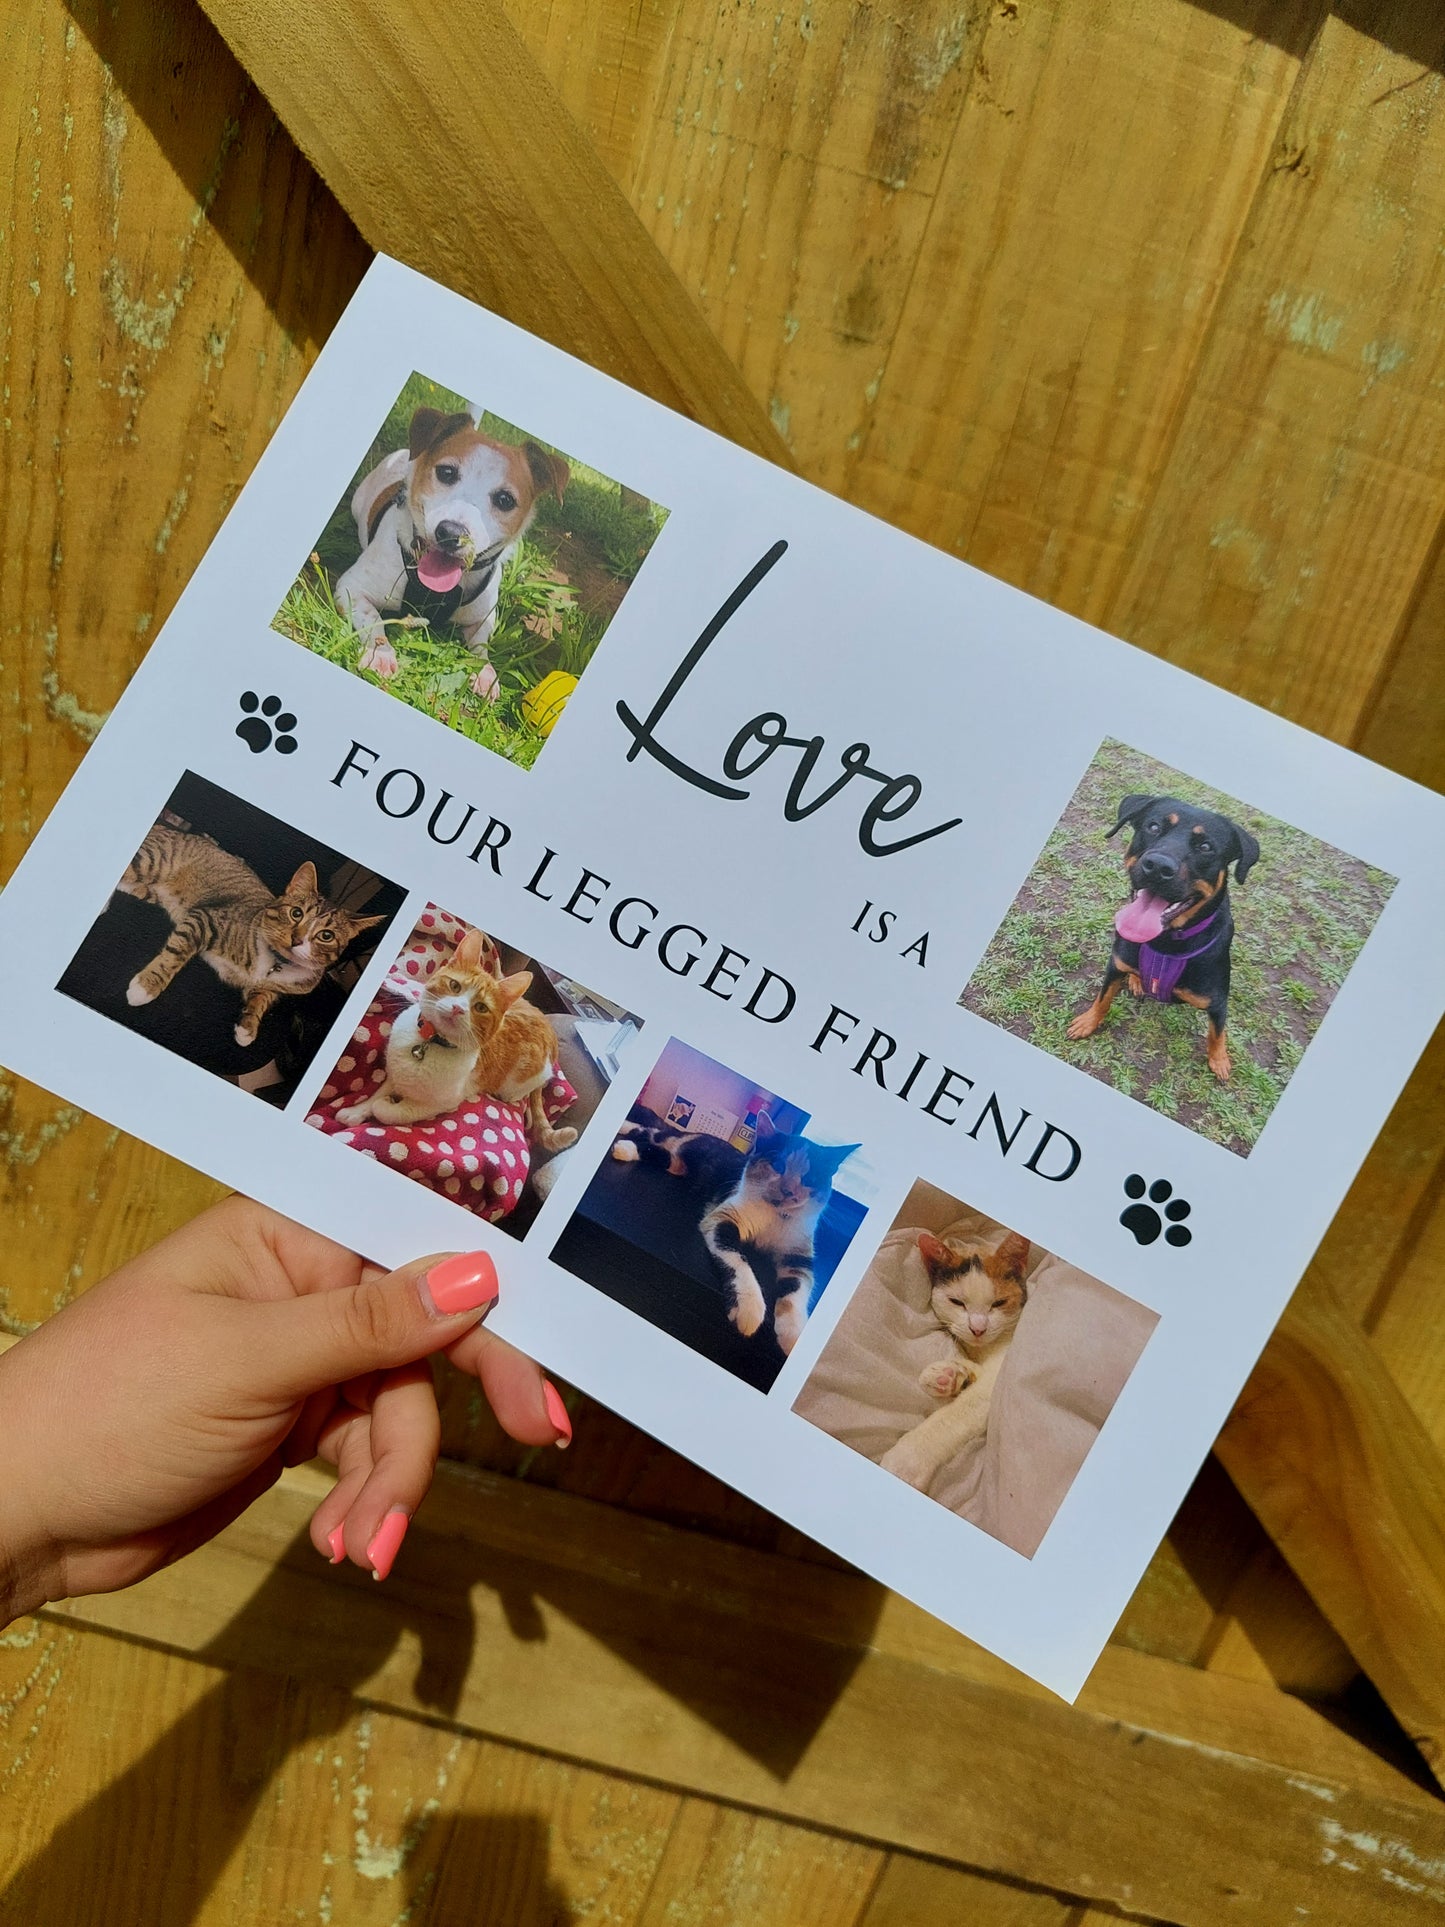 Pet Print | Love Is A Four Legged Friend | Family Print | Pet Gift